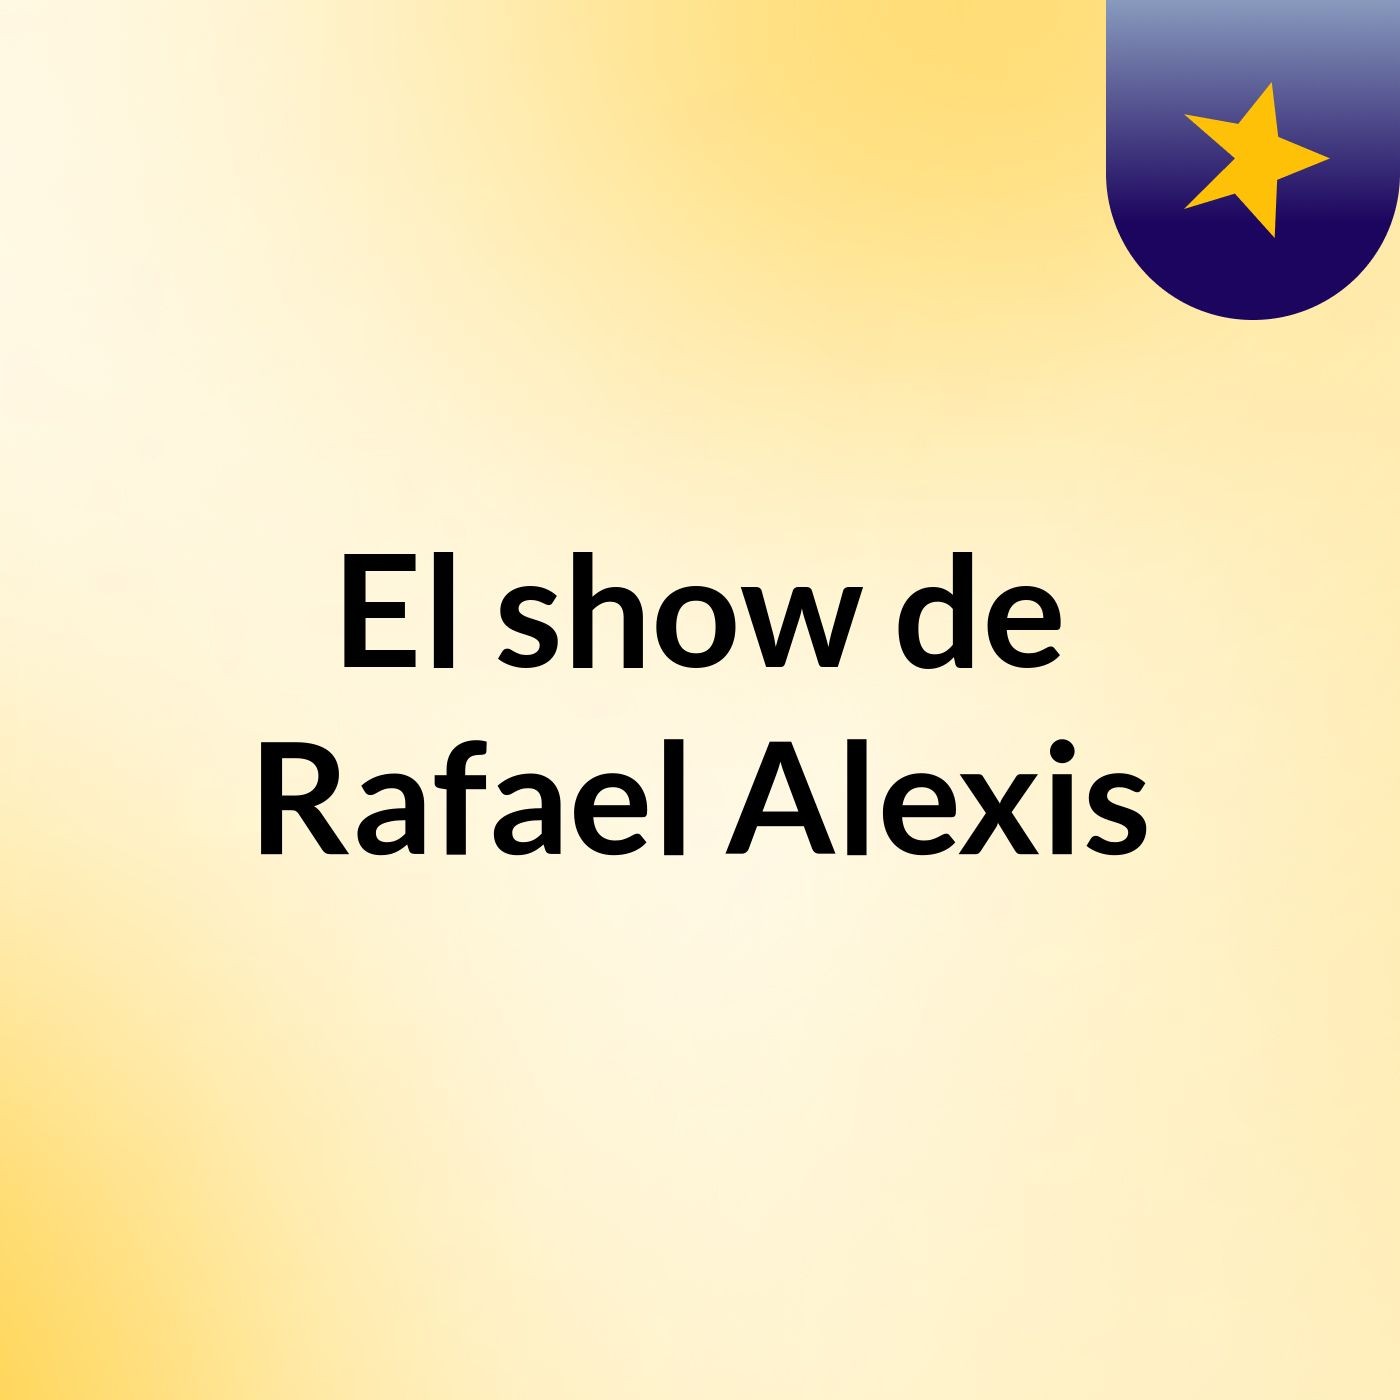 El show de Rafael Alexis